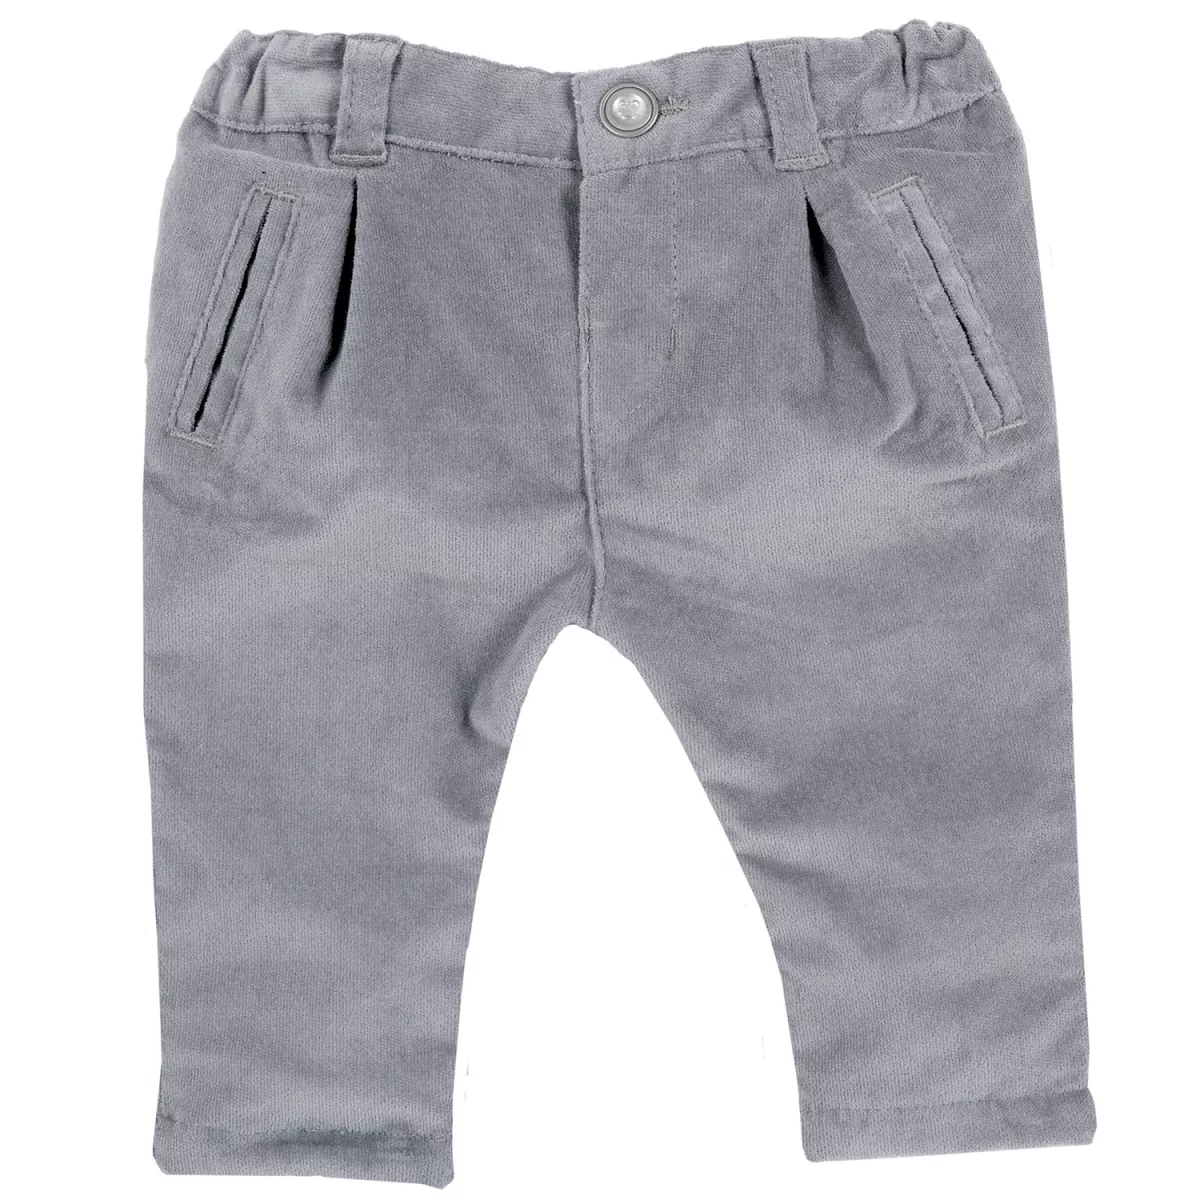 Pantalon copii Chicco, gri inchis, 62